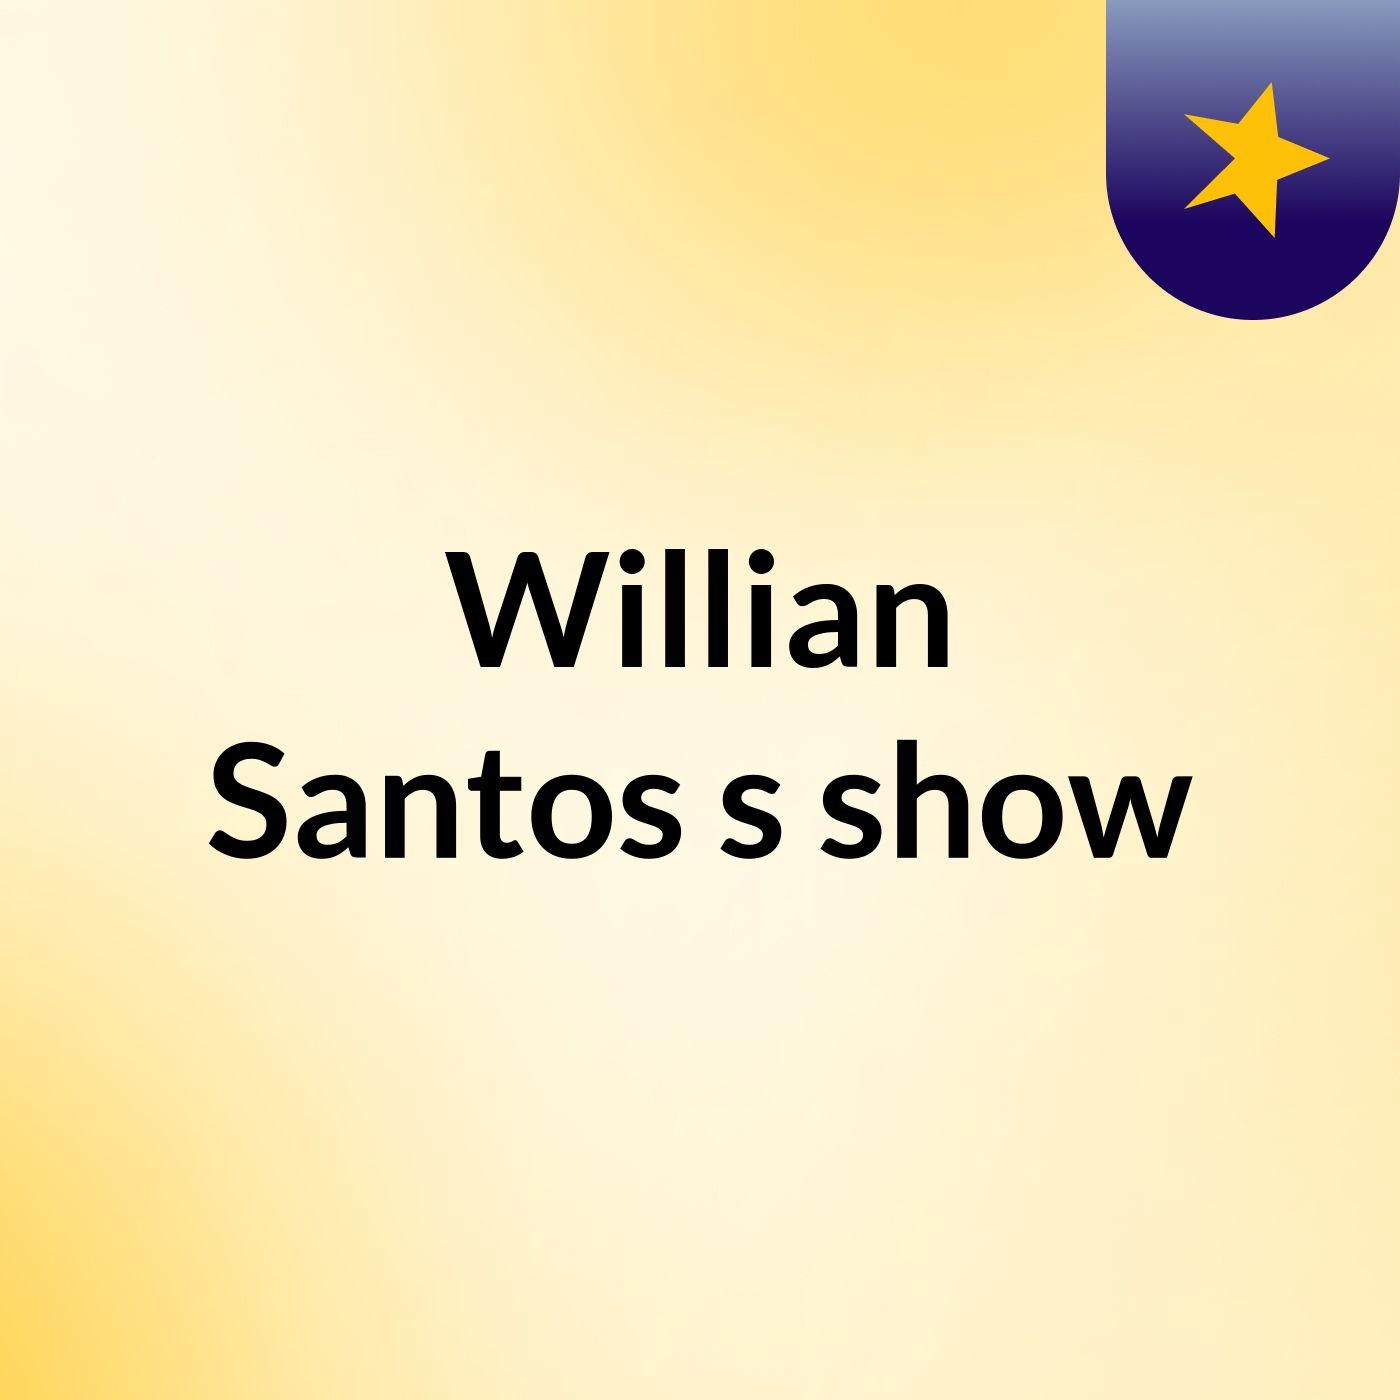 Willian Santos's show